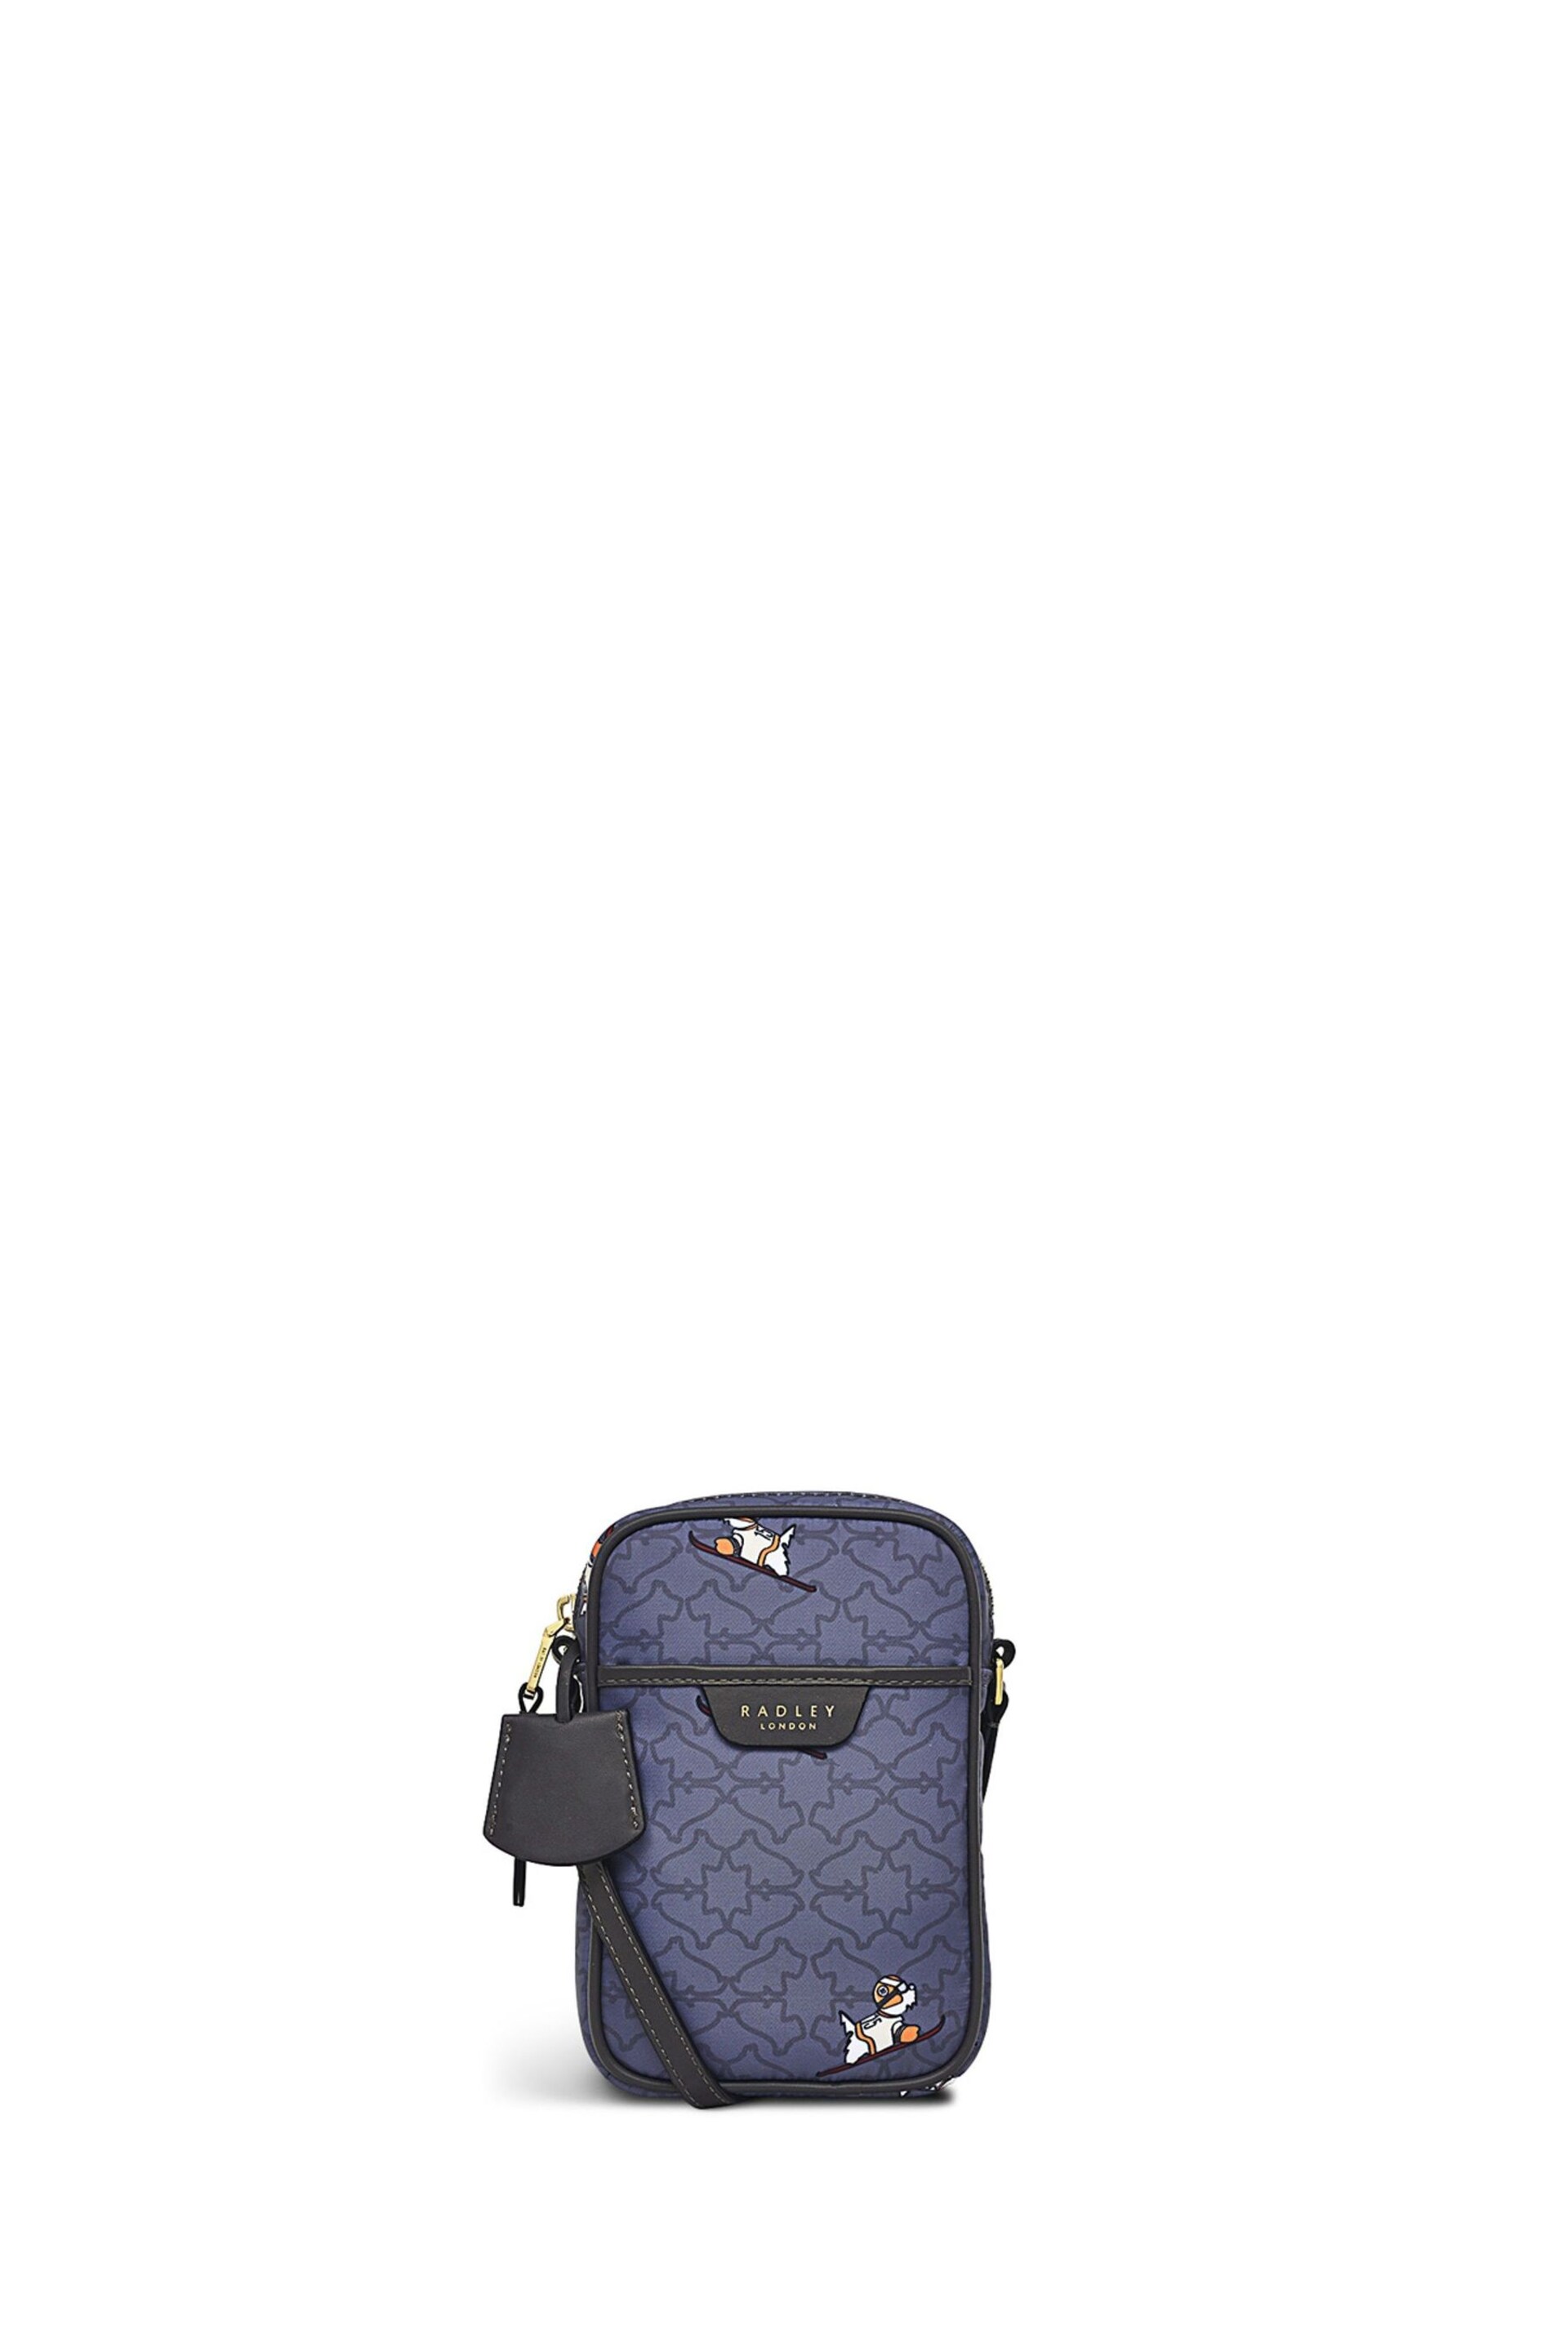 Radley London Heirloom Ski Dog Medium Phone Cross-Body Bag - Image 1 of 4